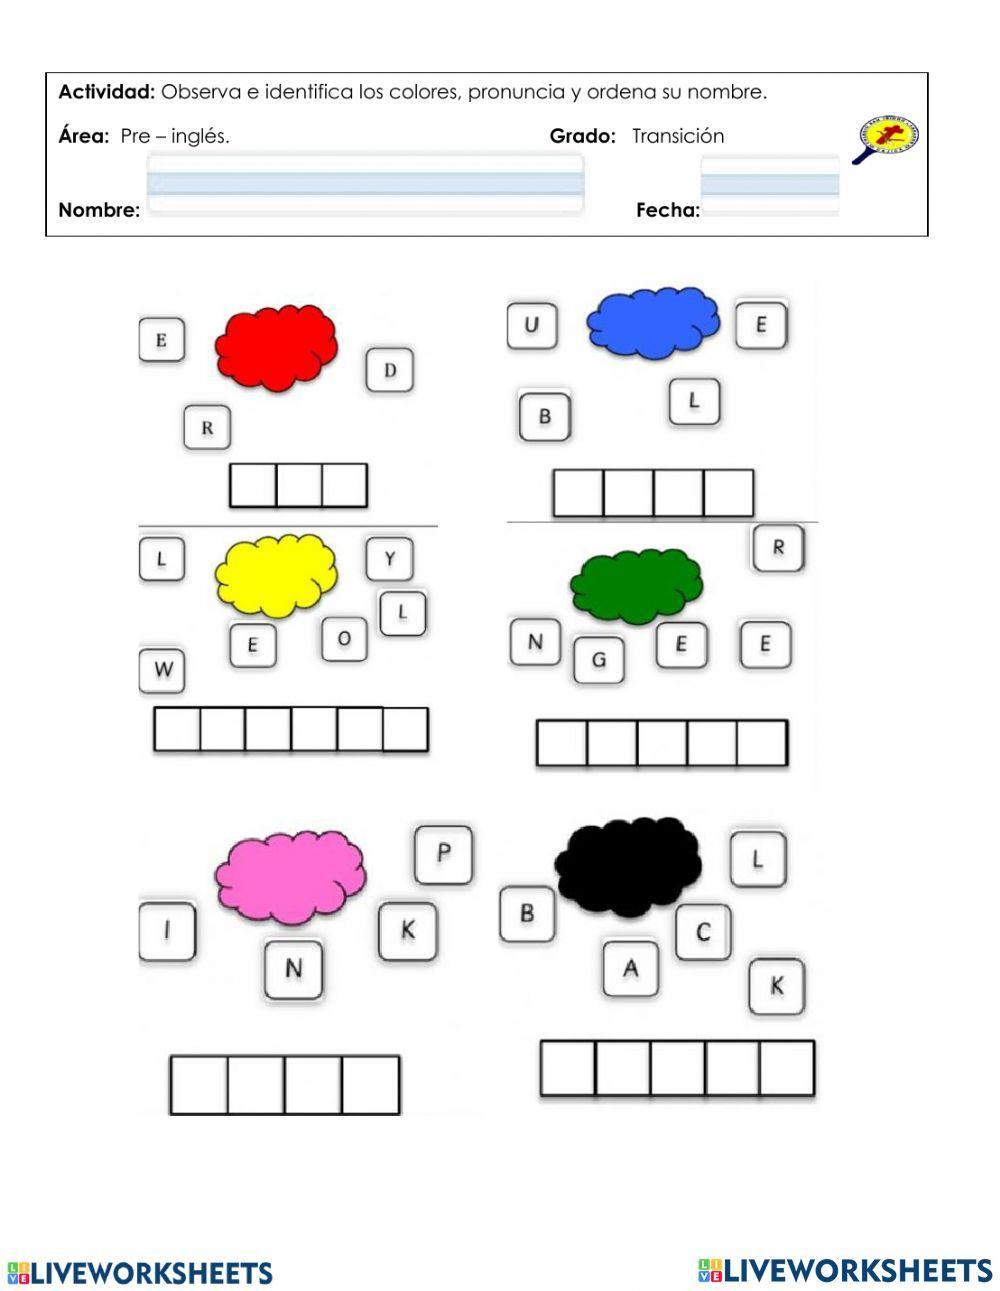 Ficha Colores En Ingles Los colores en ingles interactive exercise for PREESCOLAR | Live Worksheets